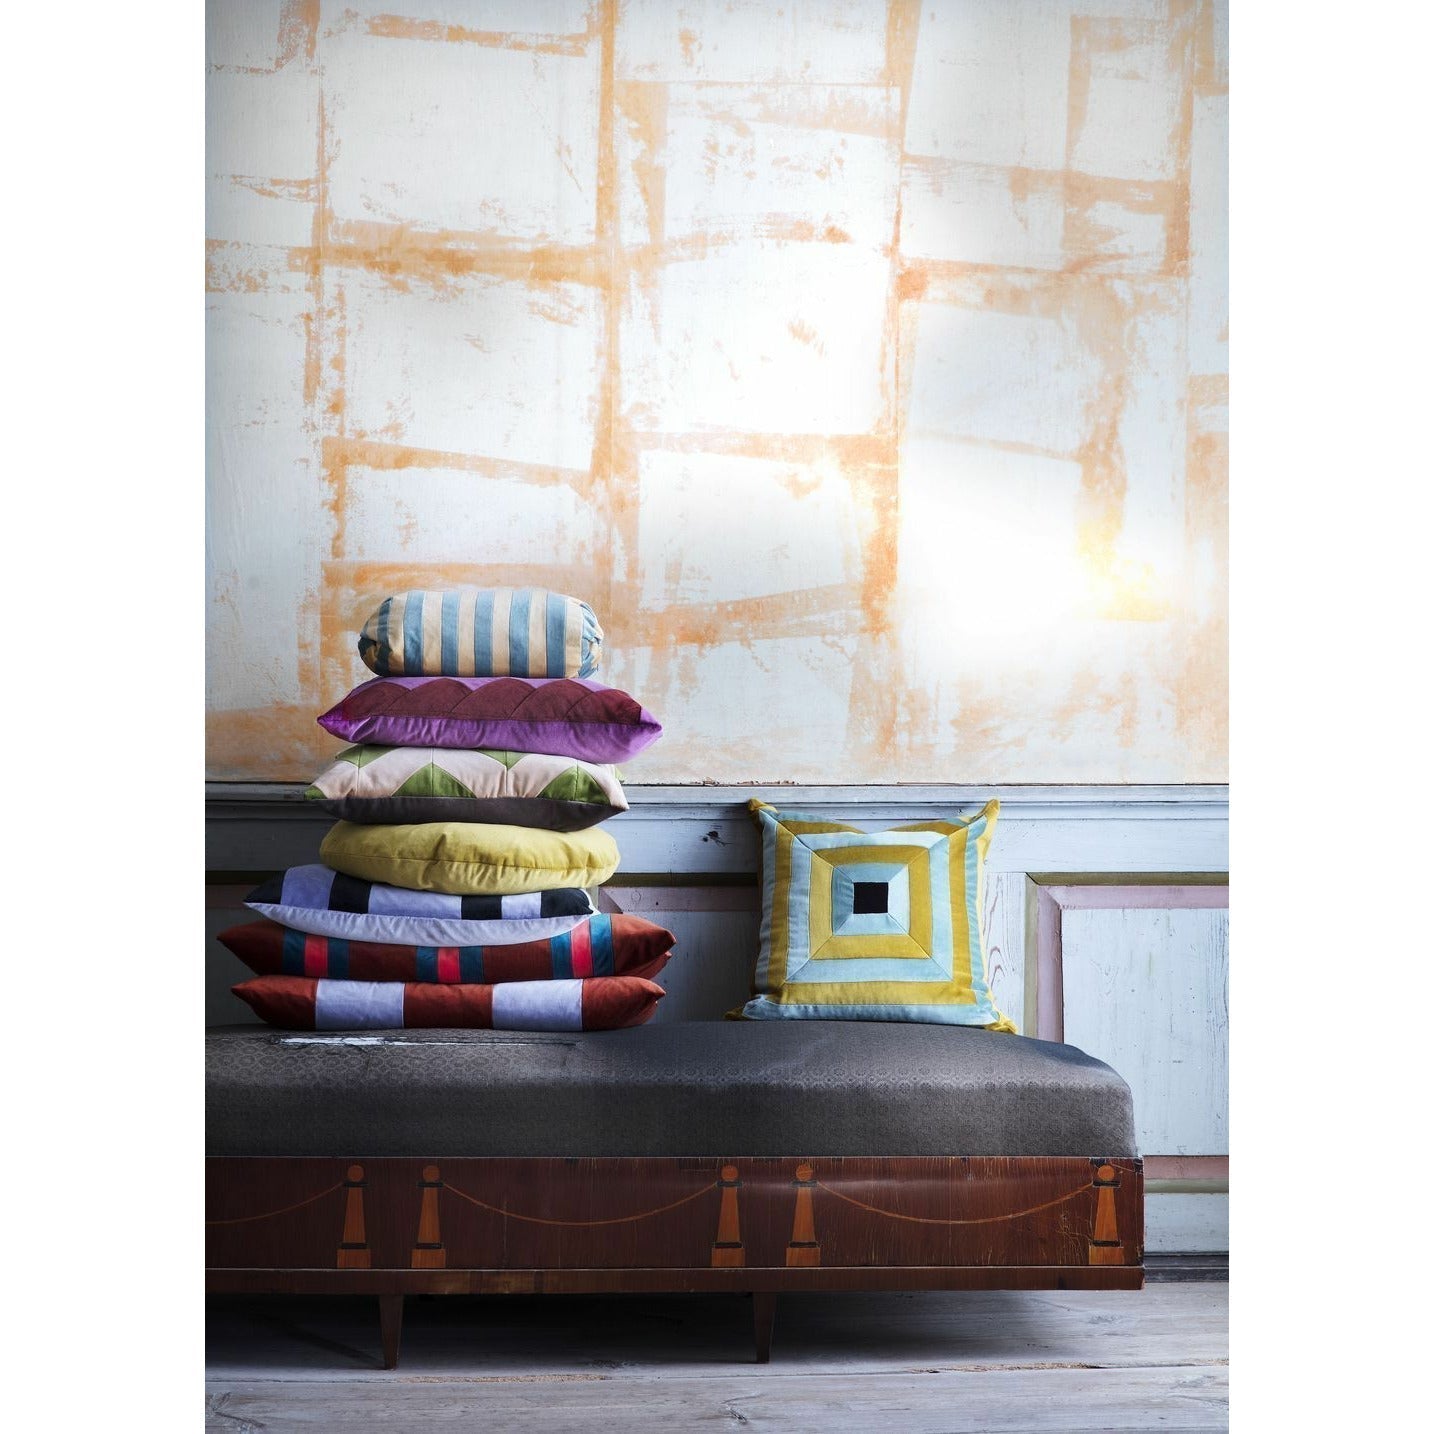 Cuscino di velluto a strisce Christina Lundsteen 40 x80 cm, rosso scuro/blush